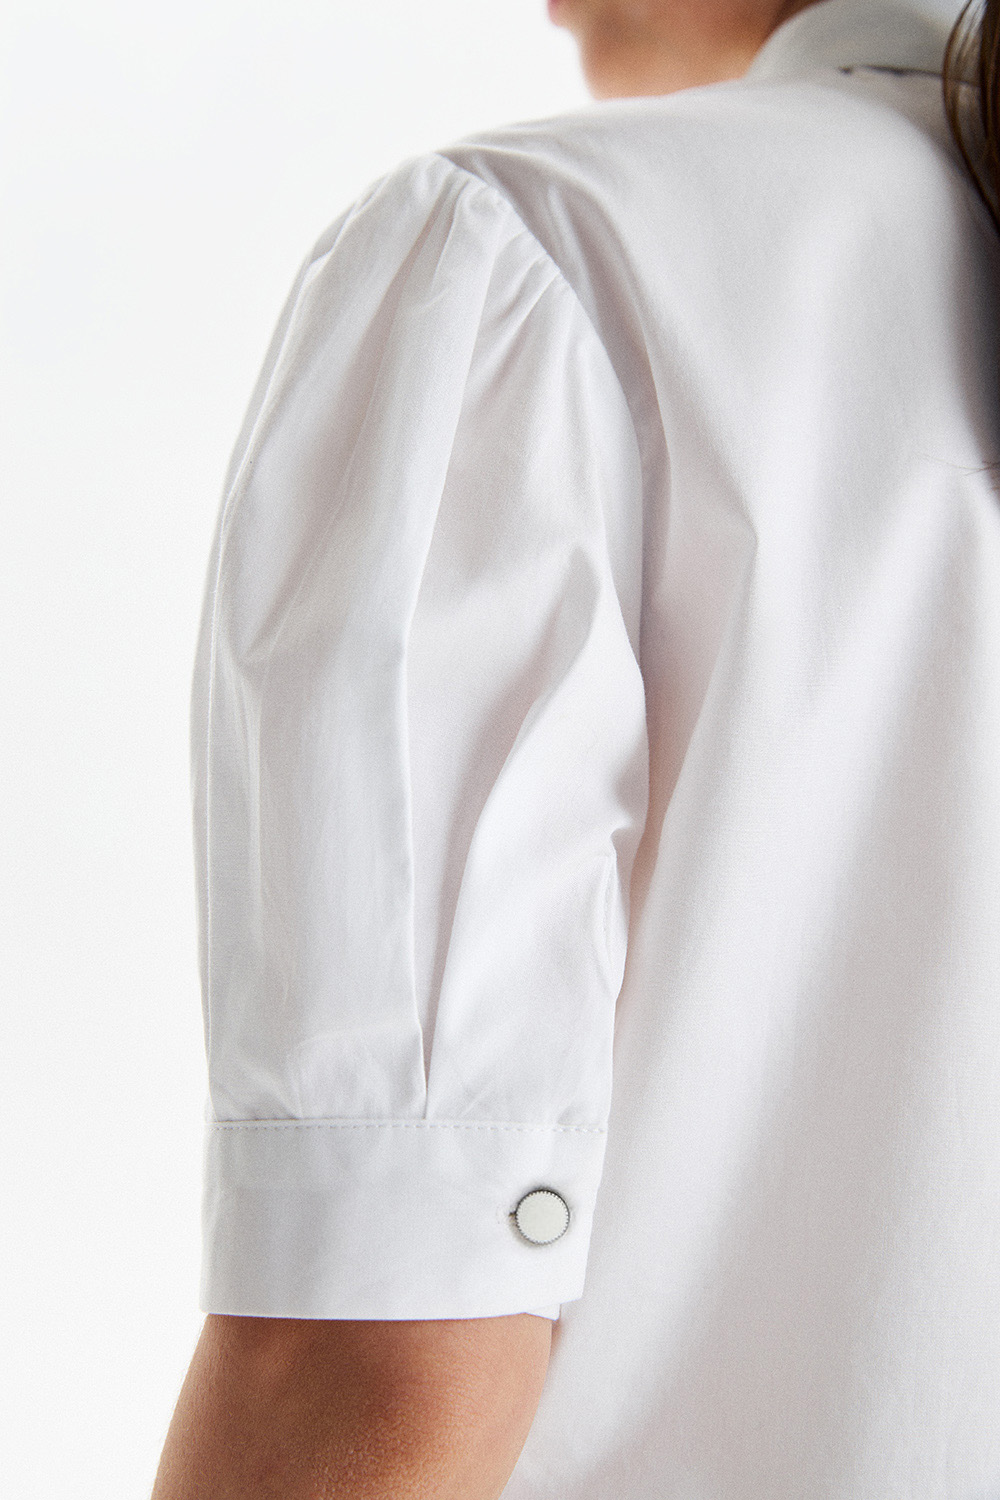 Хлопковая блузка с объемными рукавами (SSFSG-329-23113-200) Silver Spoon